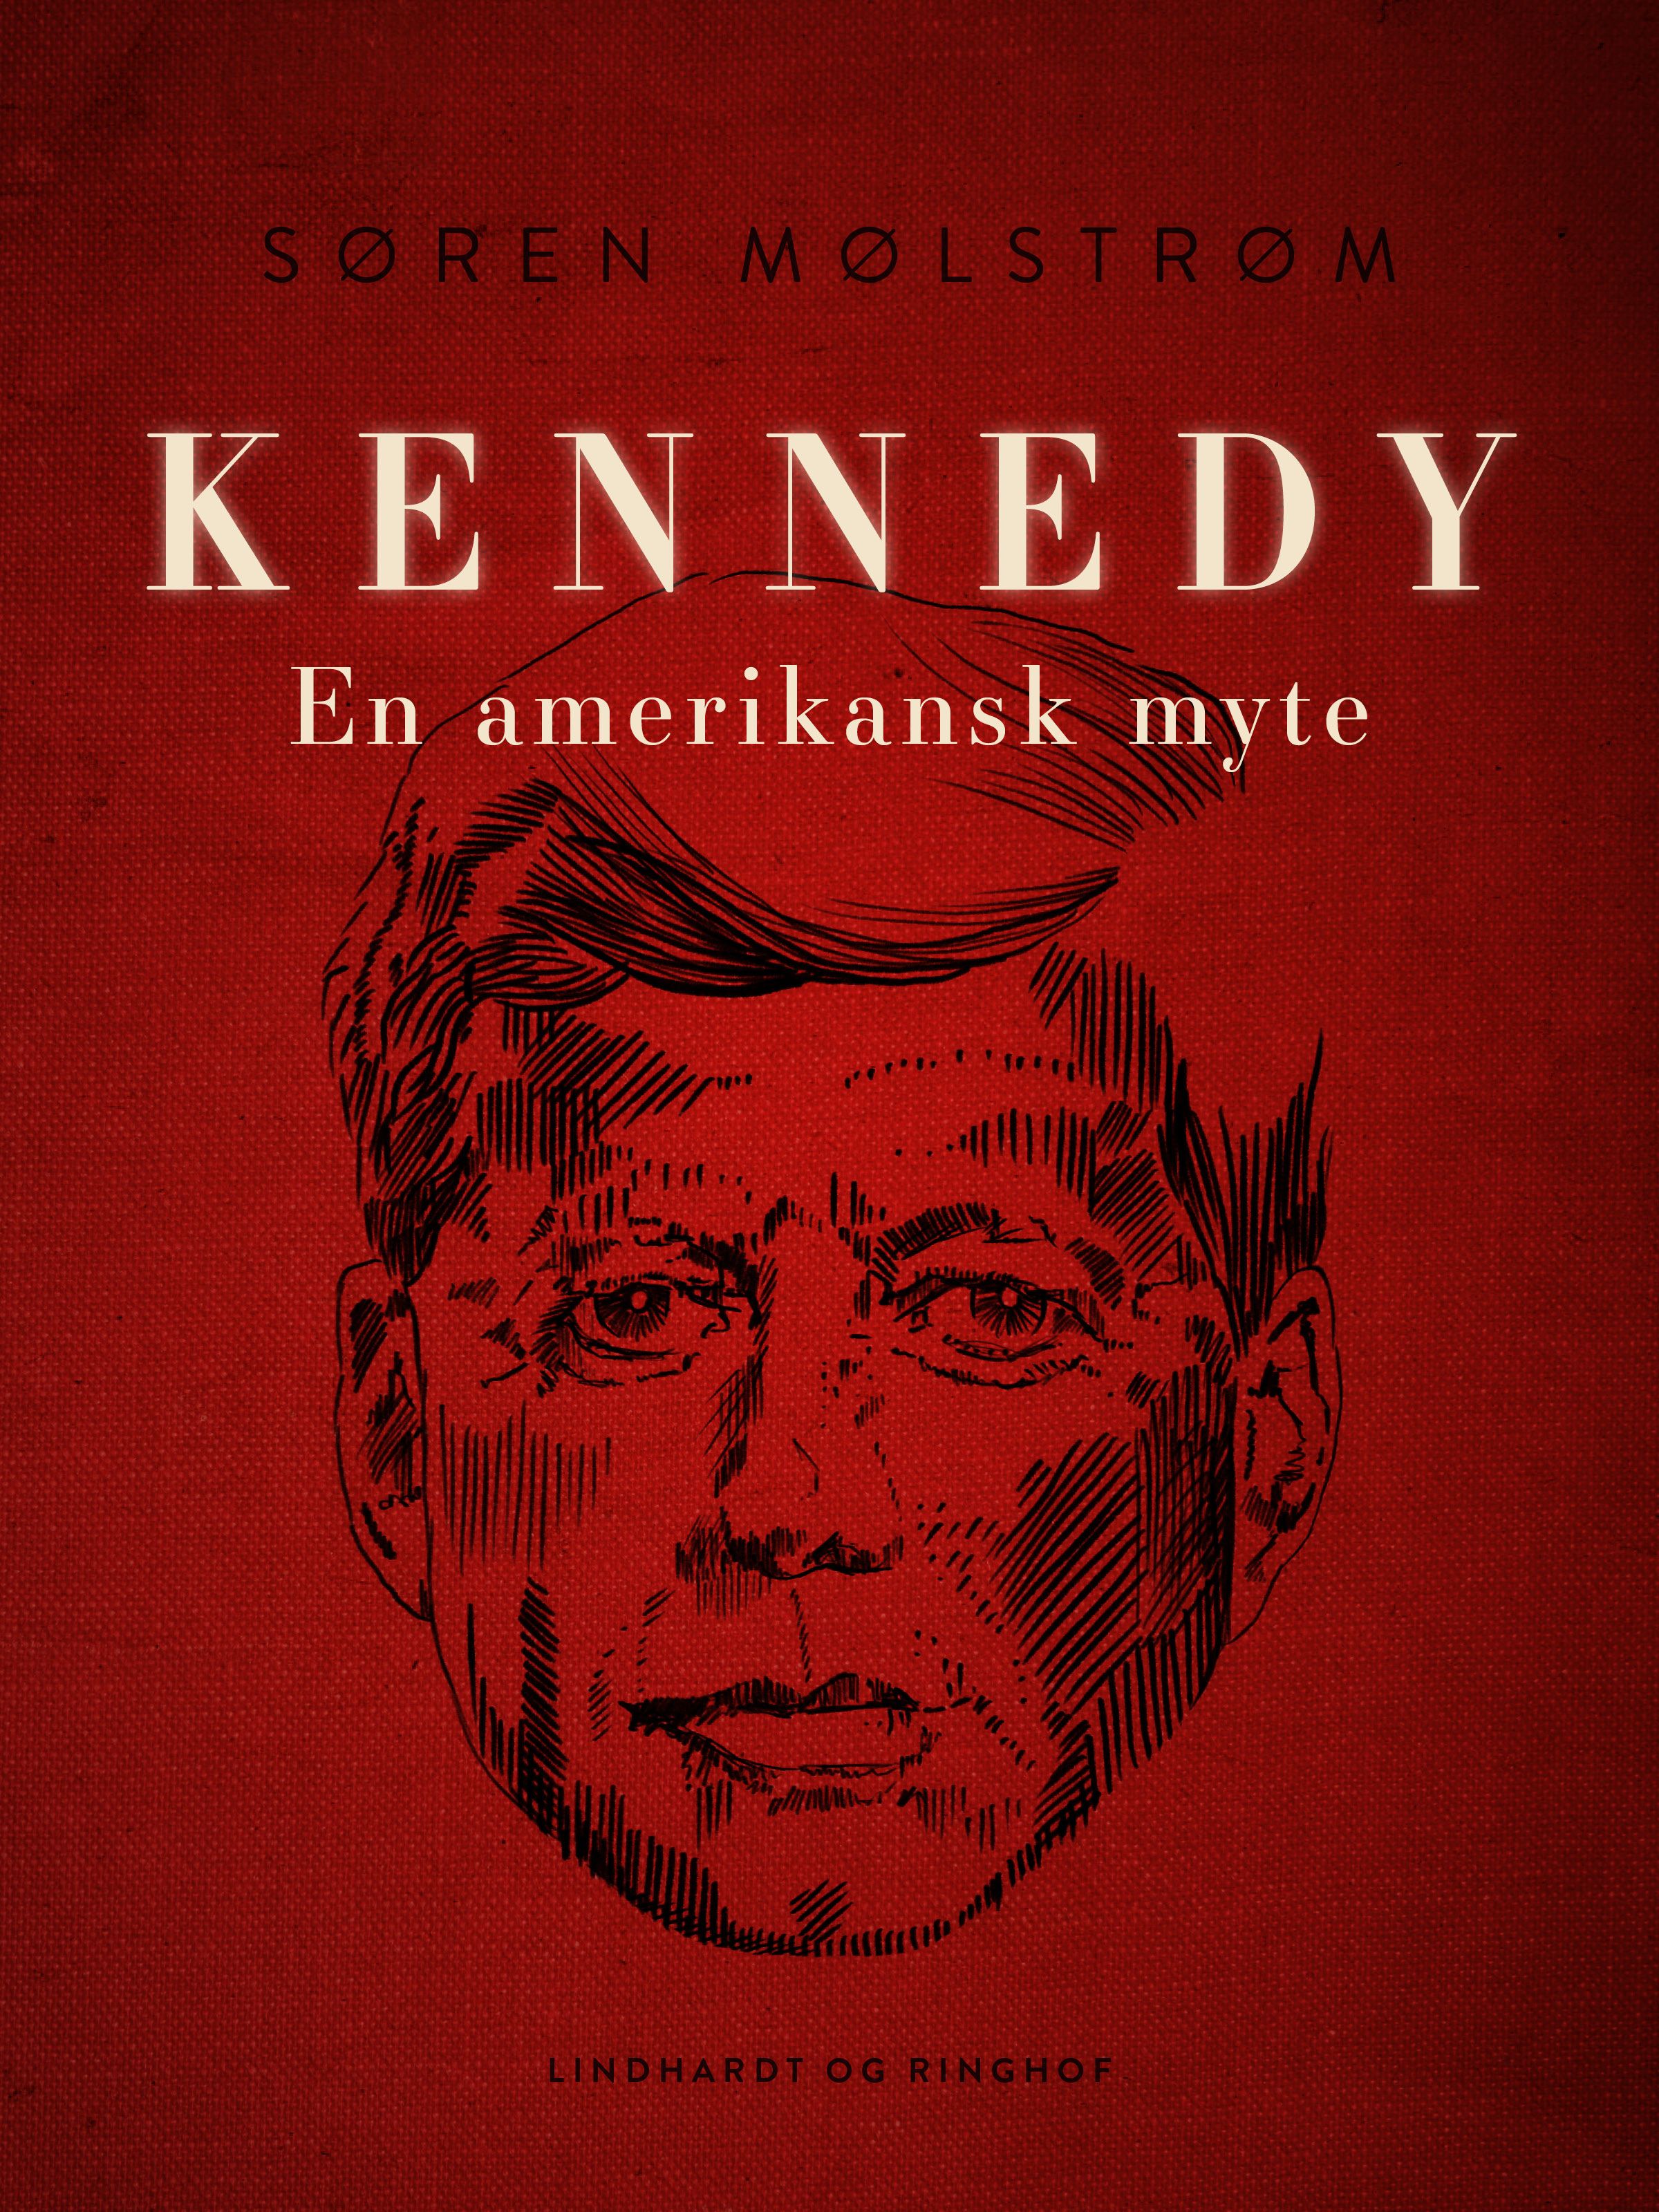 Kennedy - en amerikansk myte, eBook by Søren Mølstrøm